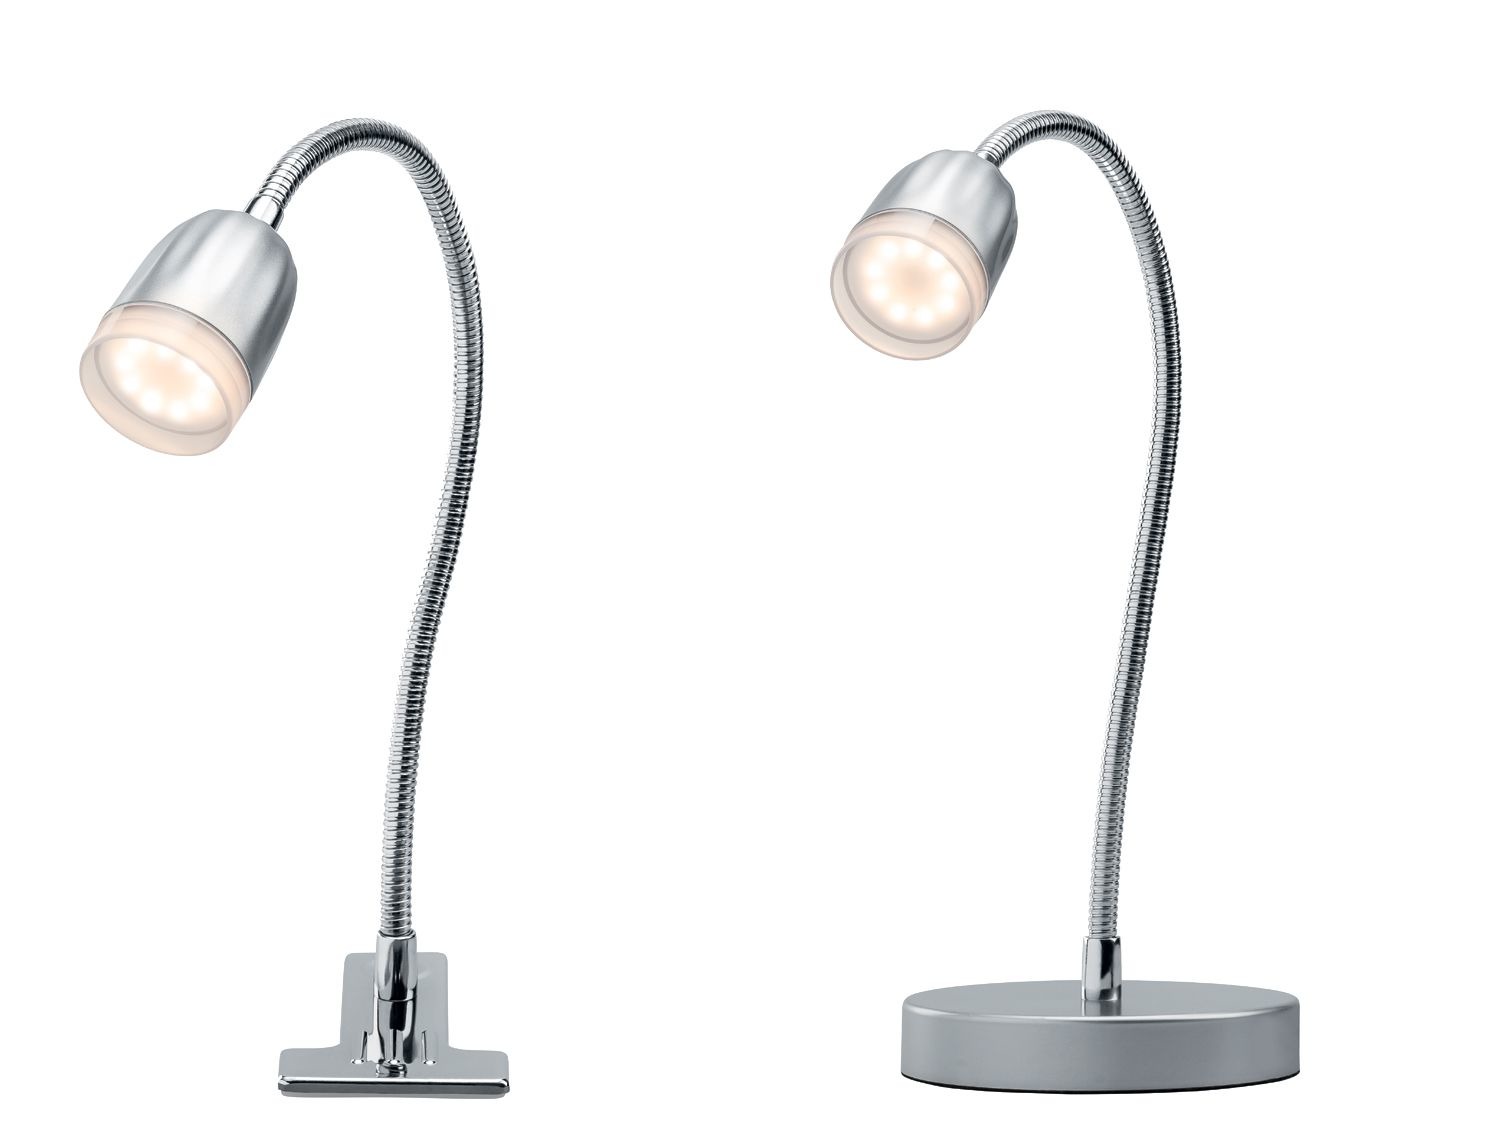 Clancy Afdrukken Weven LIVARNO LUX LED-klemlamp of -tafellamp | LIDL